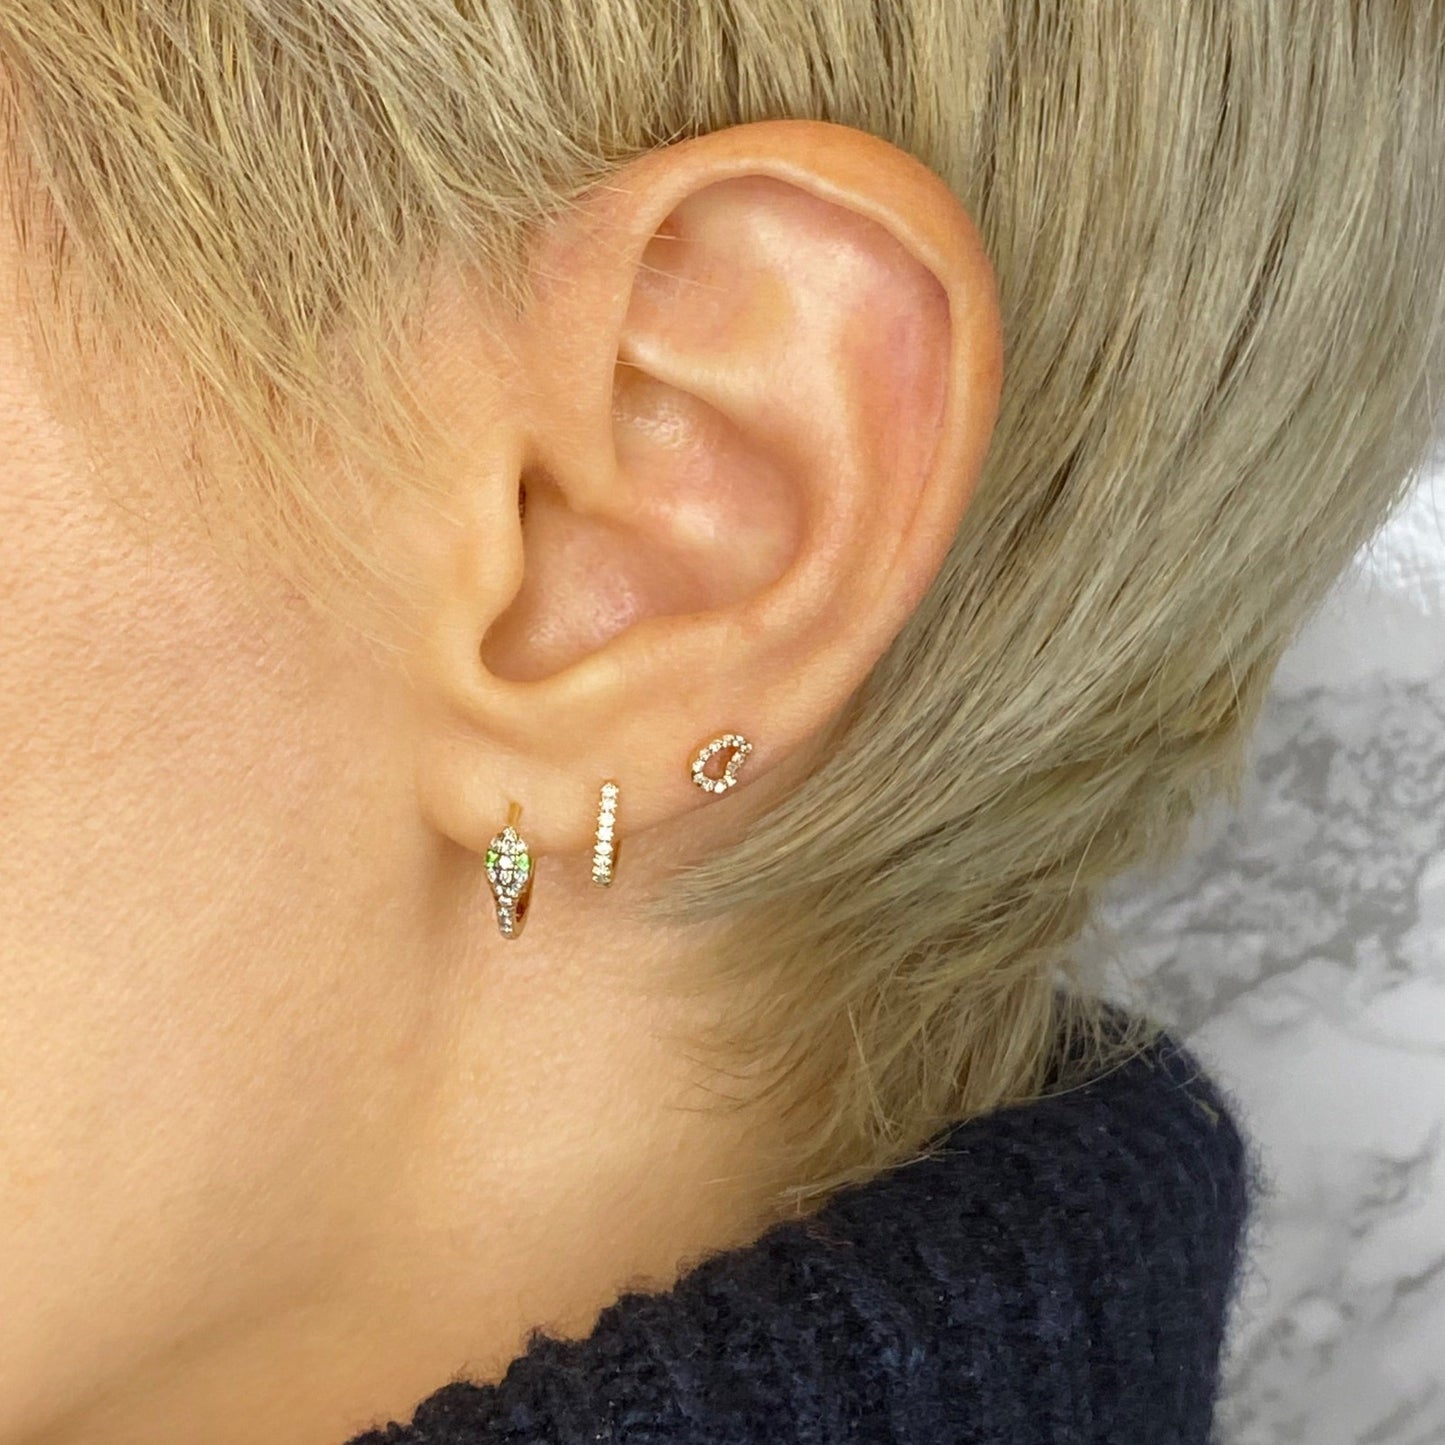 14k gold 10mm Diamond Pavé Hoop Earring styled on a ear